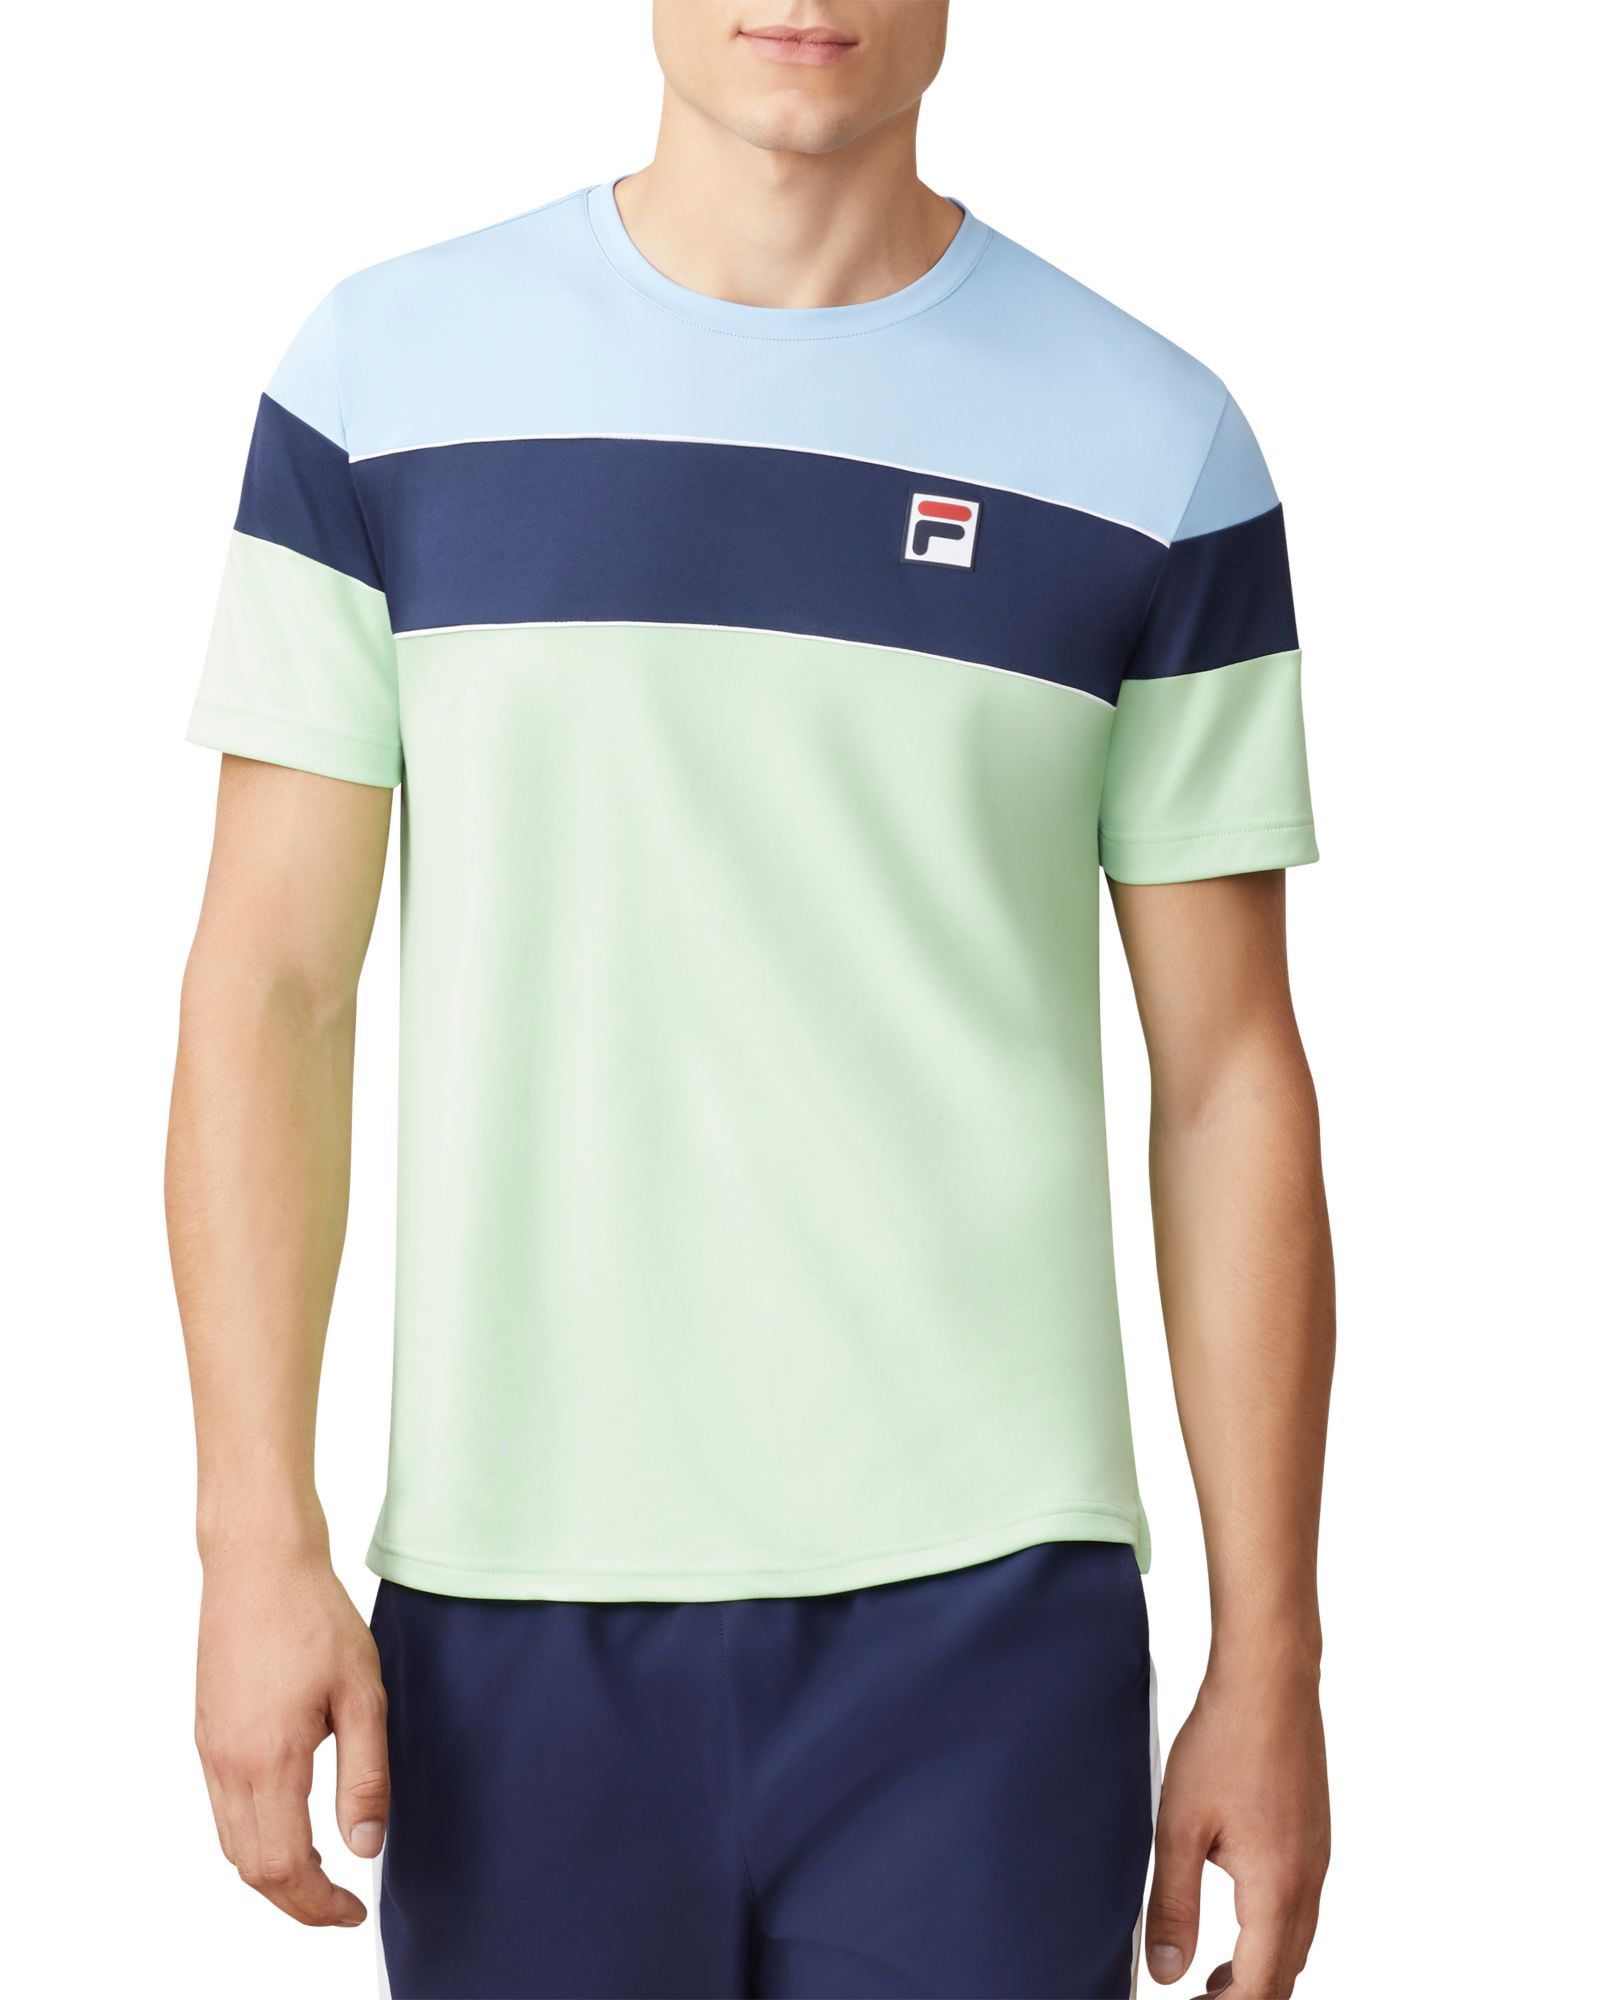 fila tennis shirt